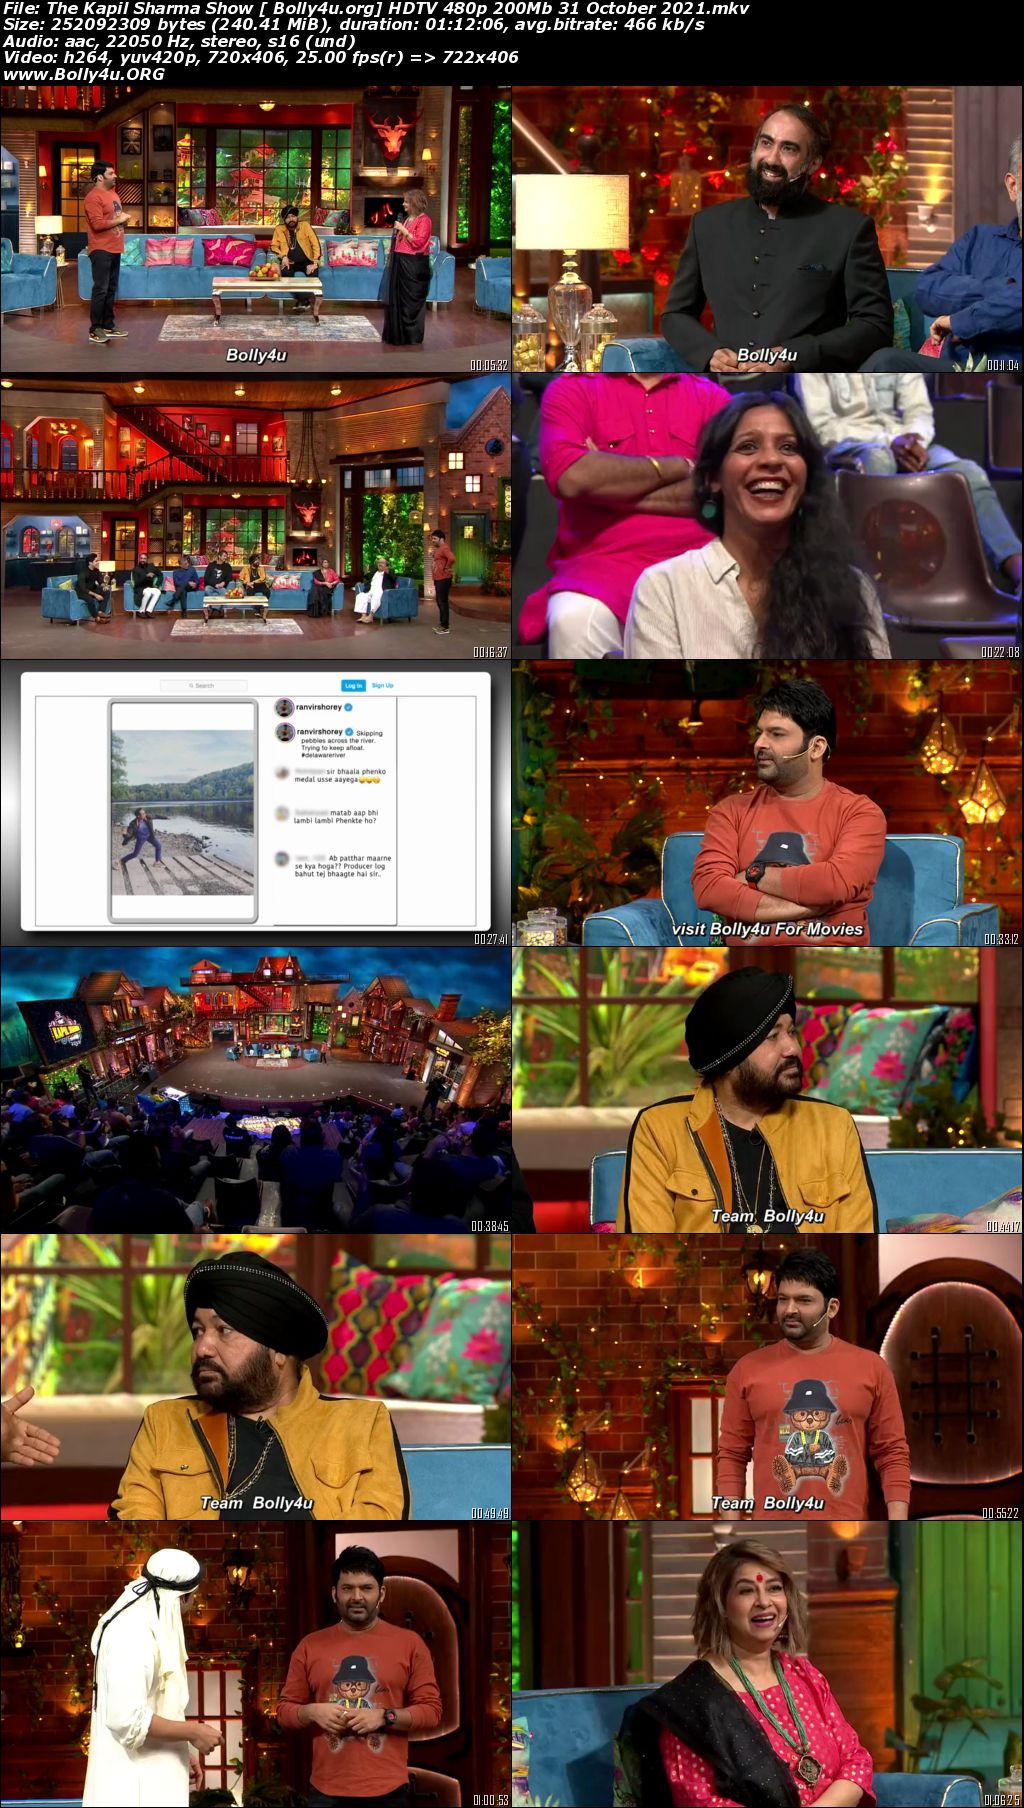 The Kapil Sharma Show HDTV 480p 200Mb 31 October 2021 Download